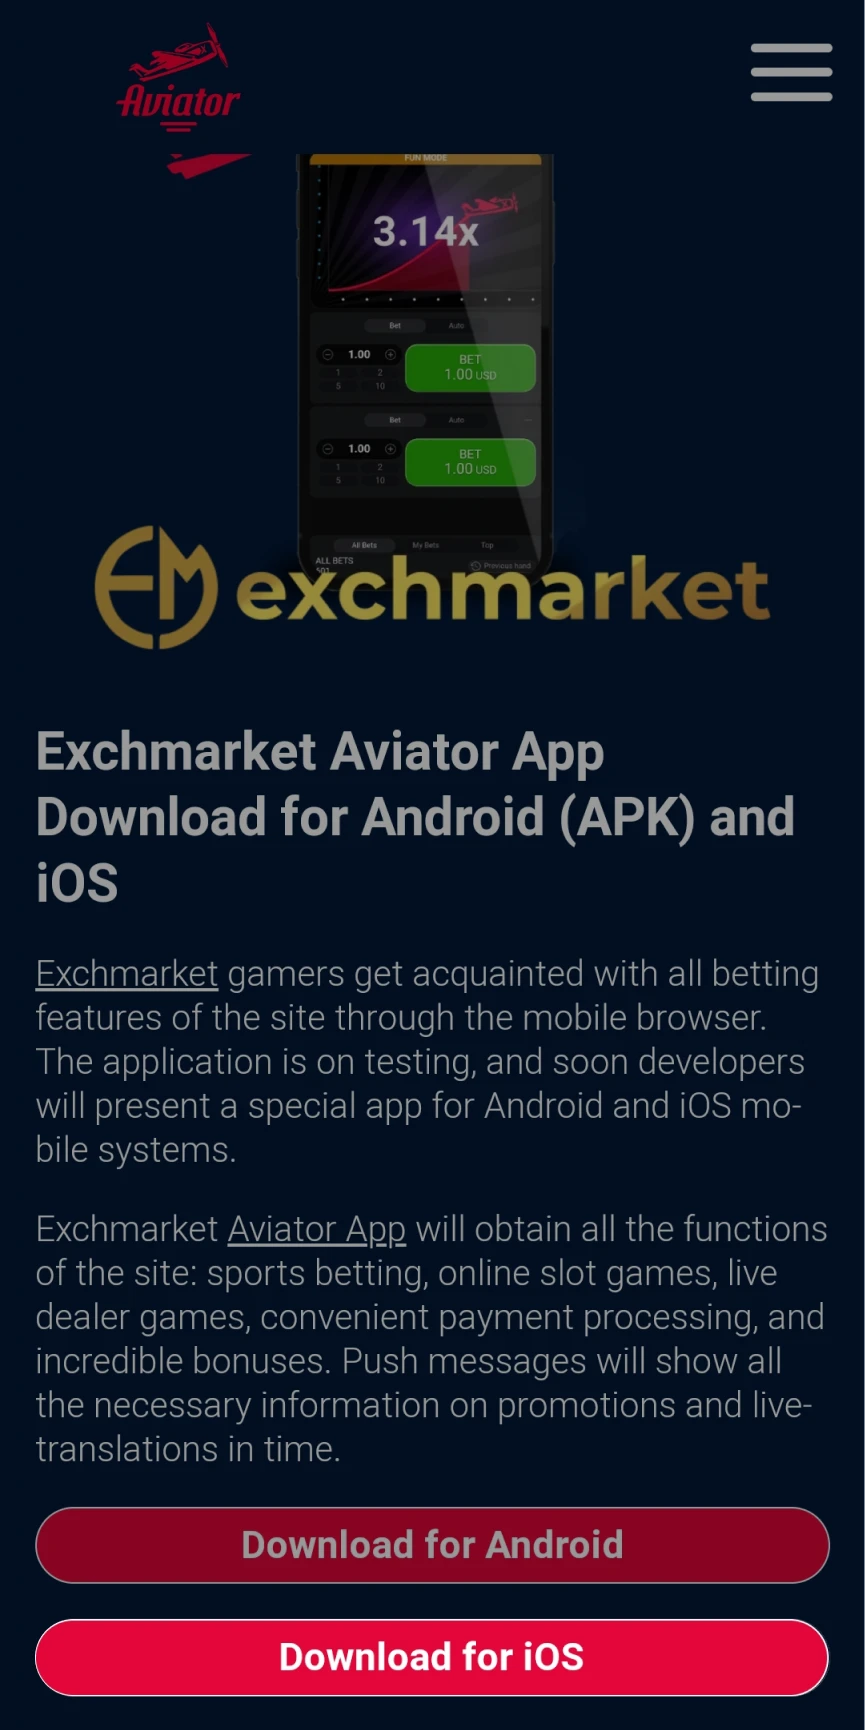 Vá para a página de download do Exchmarket para iOS.